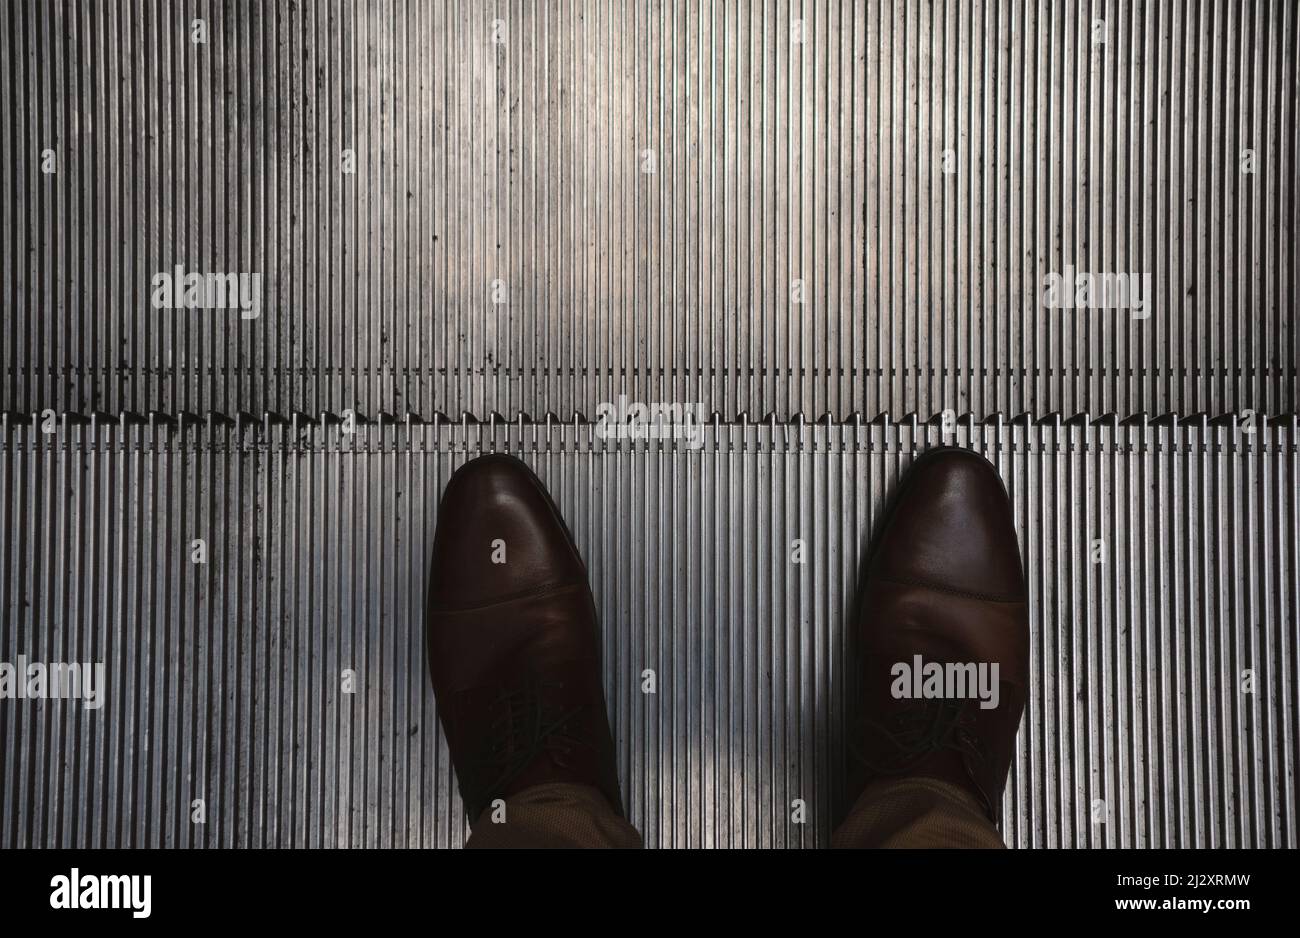 Detail of escalators with a focus on men's feet, shoe details Stock ...